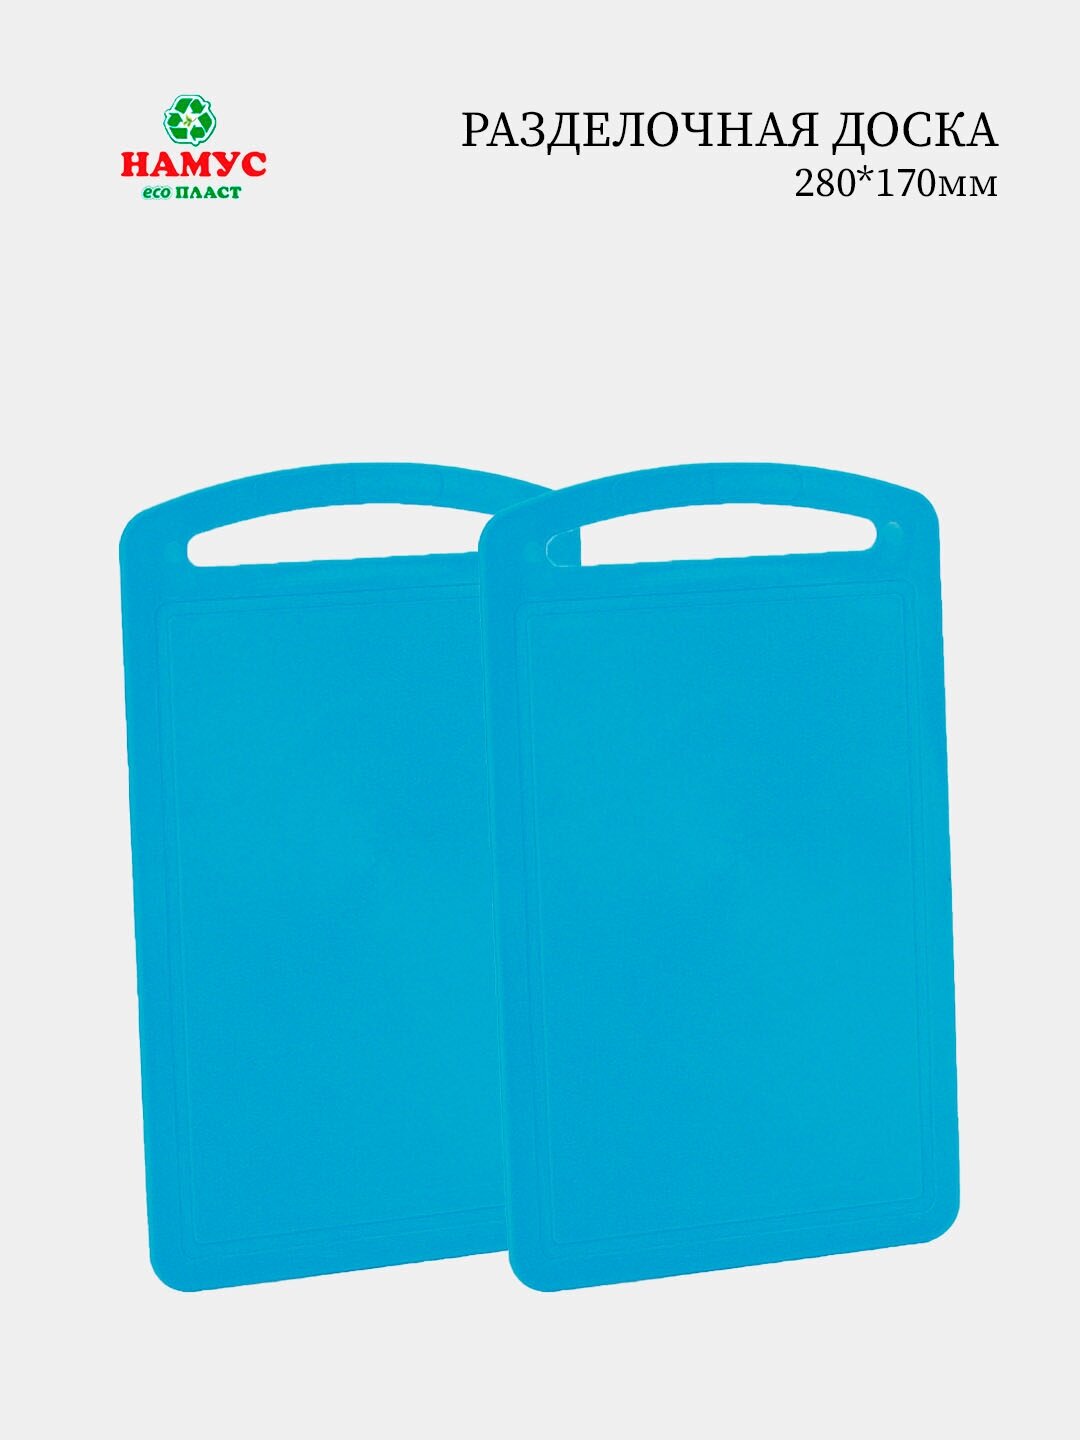 Разделочная доска "Намус" 280х170мм синий, комплект 2шт